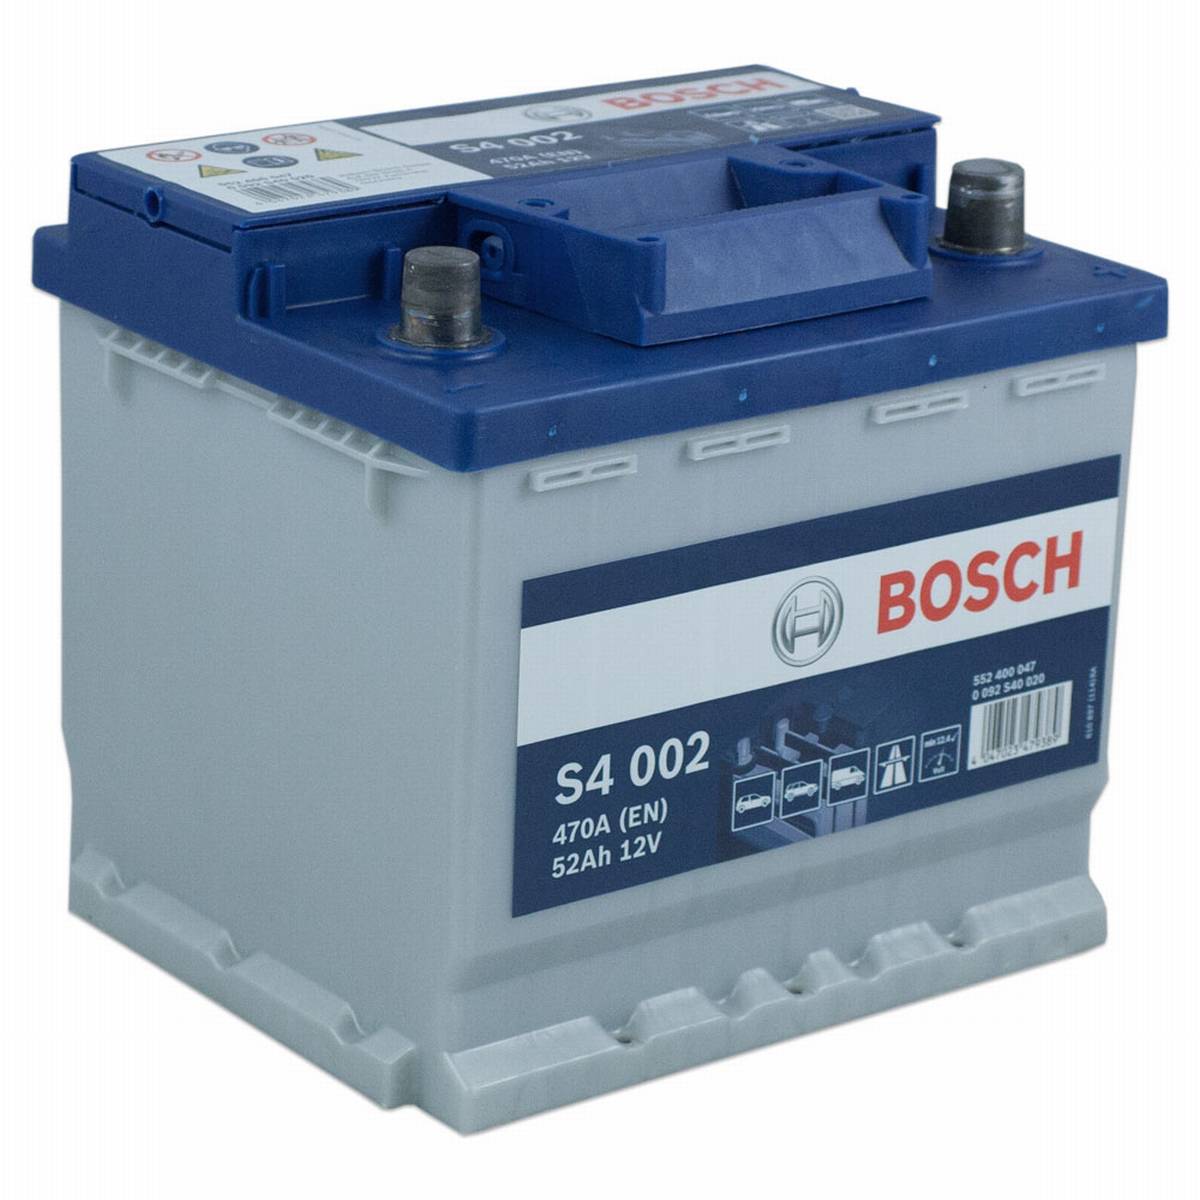 Bosch S4 002 Autobatterie 12V 52Ah 470A, Starterbatterie, Boot, Batterien für